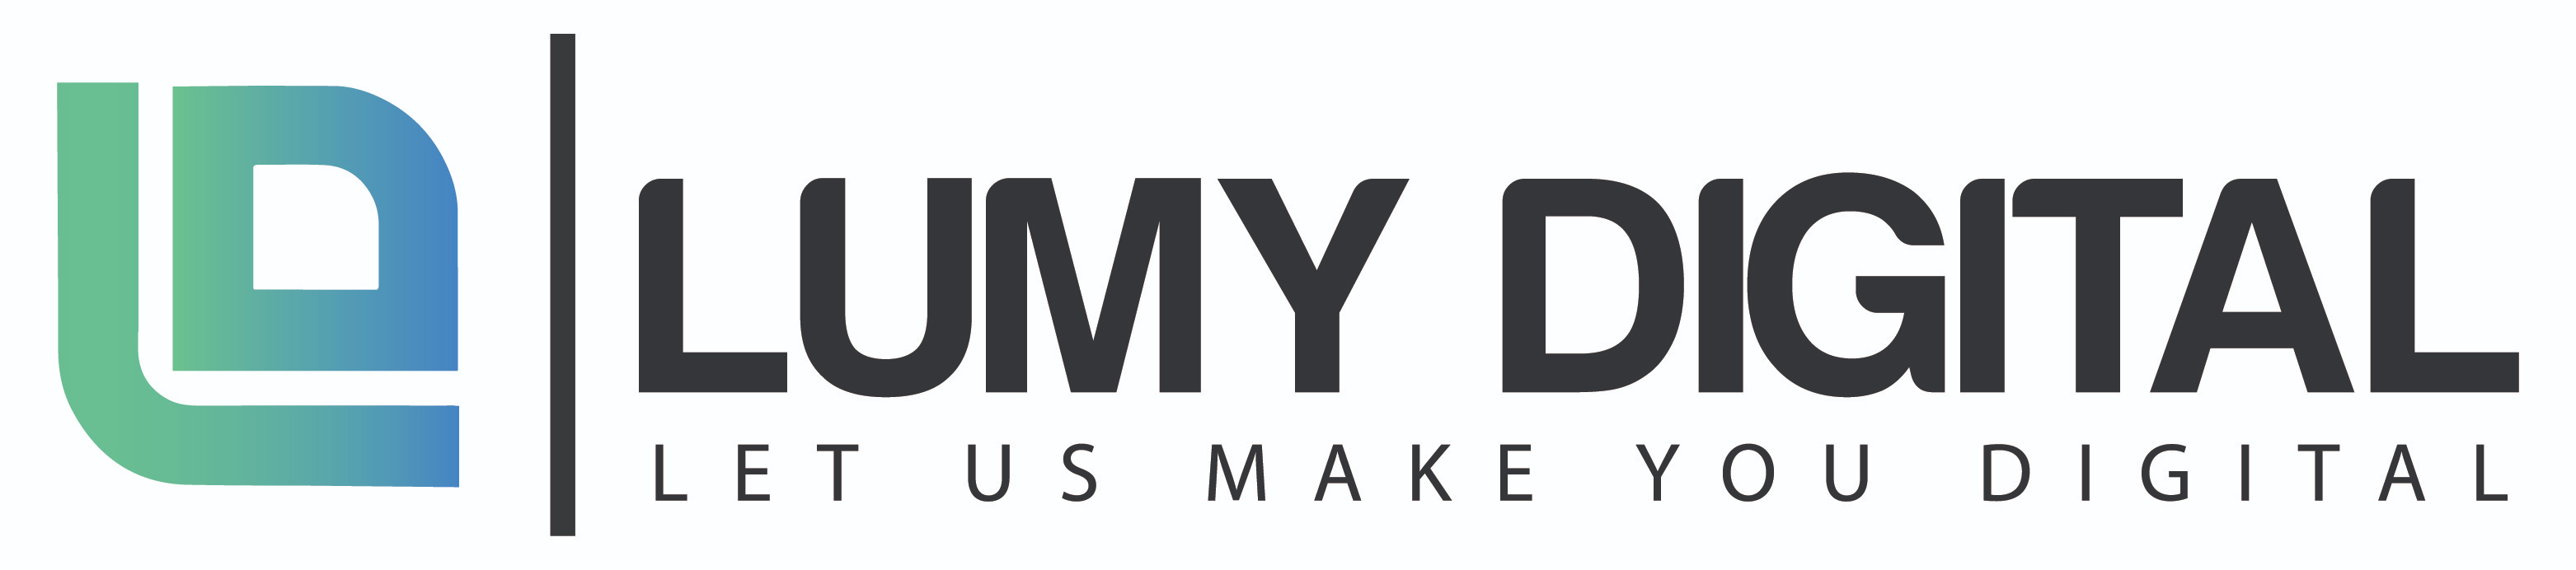 LUMY Digital Inc